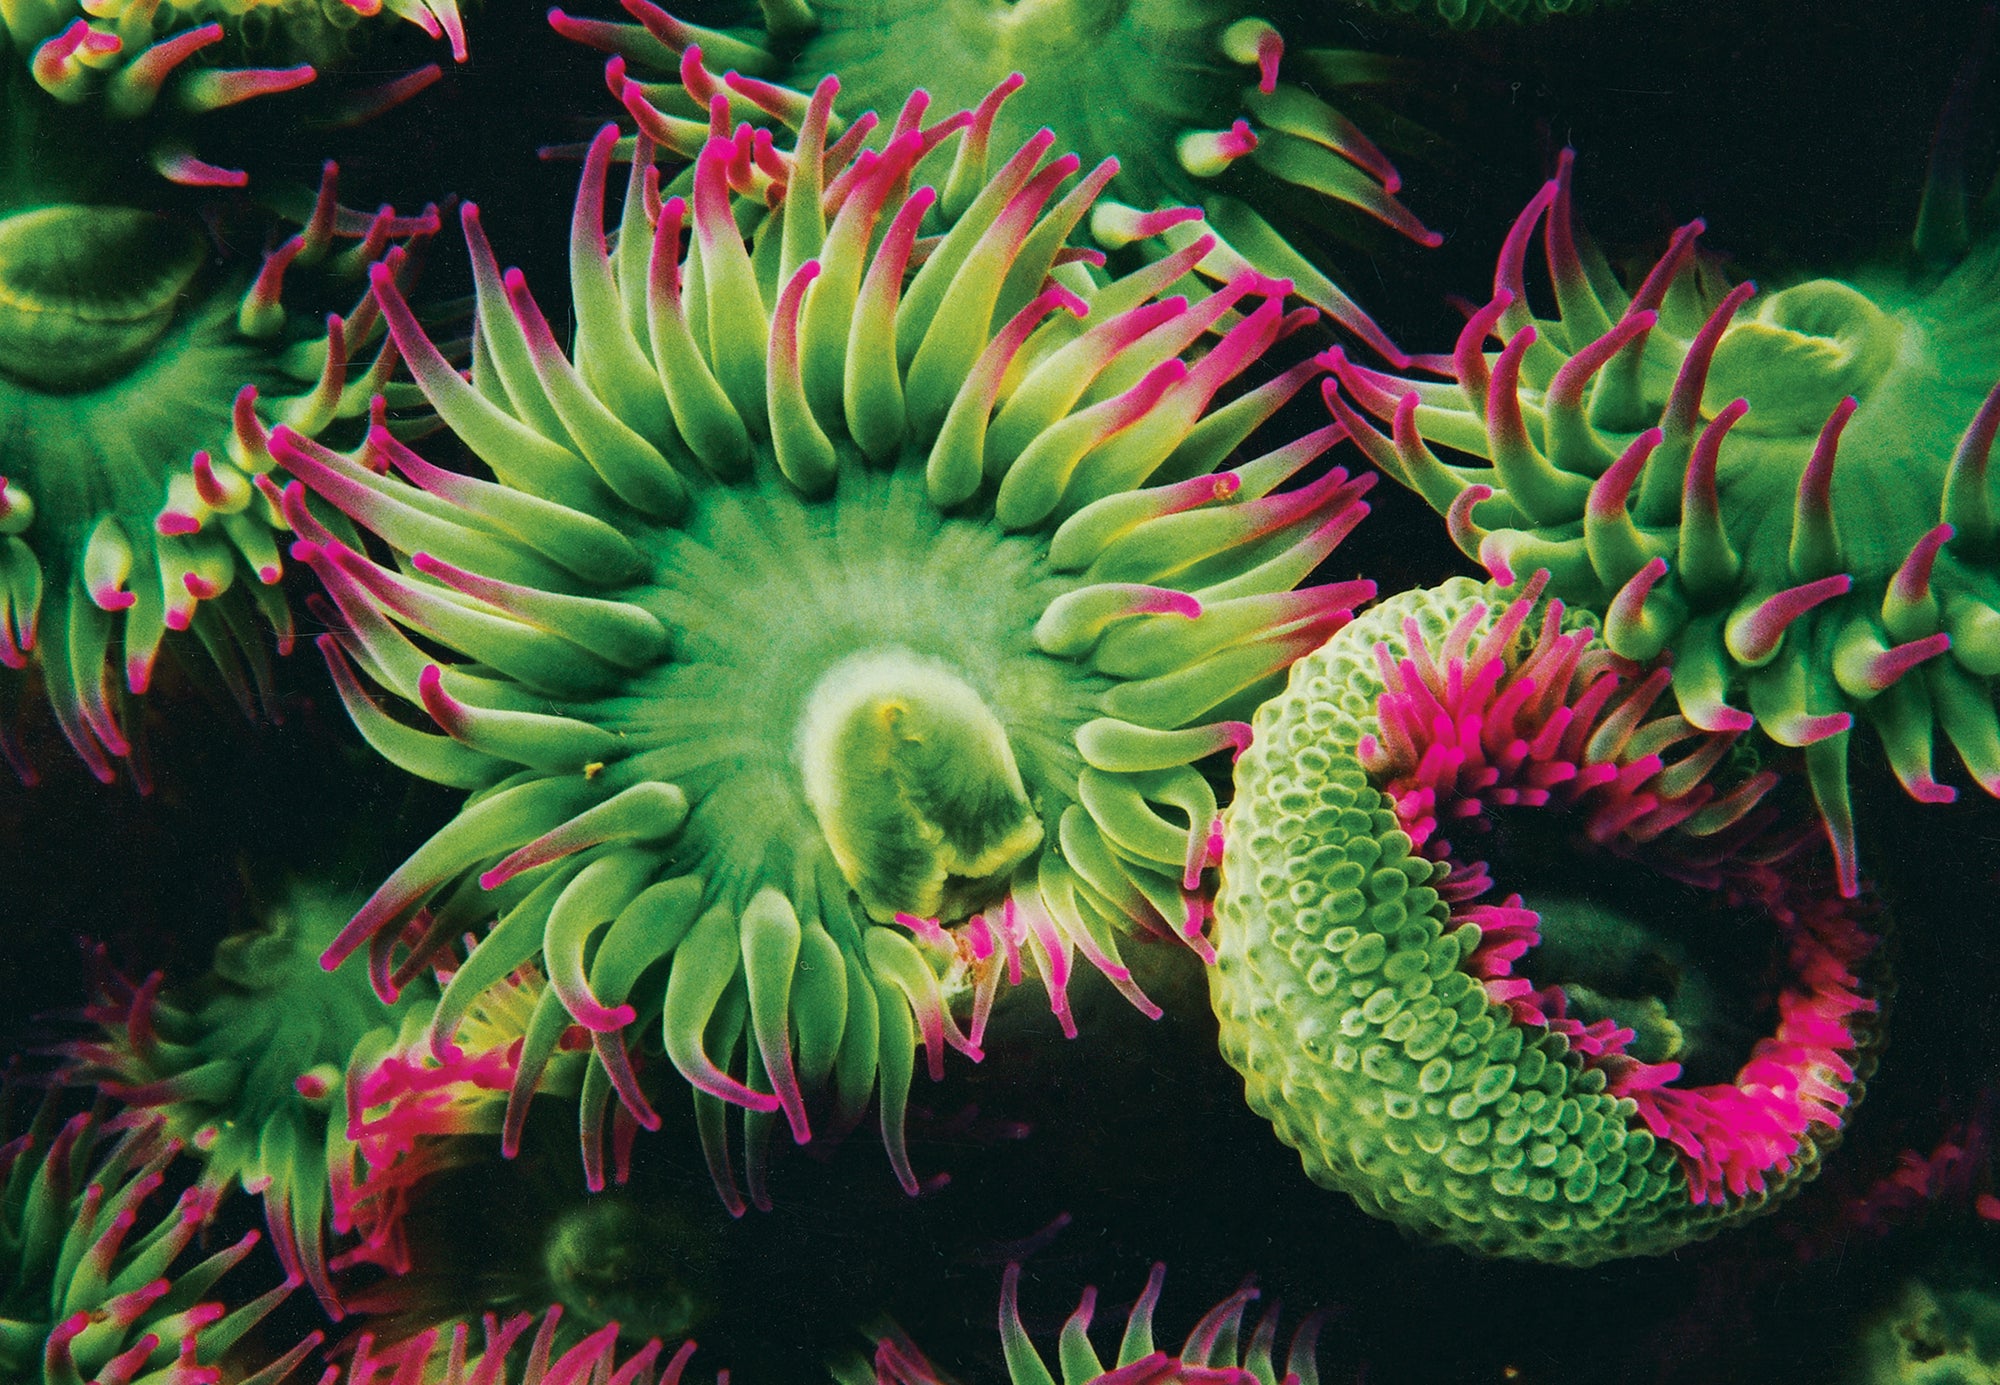 A cluster of anemones. End of image description.